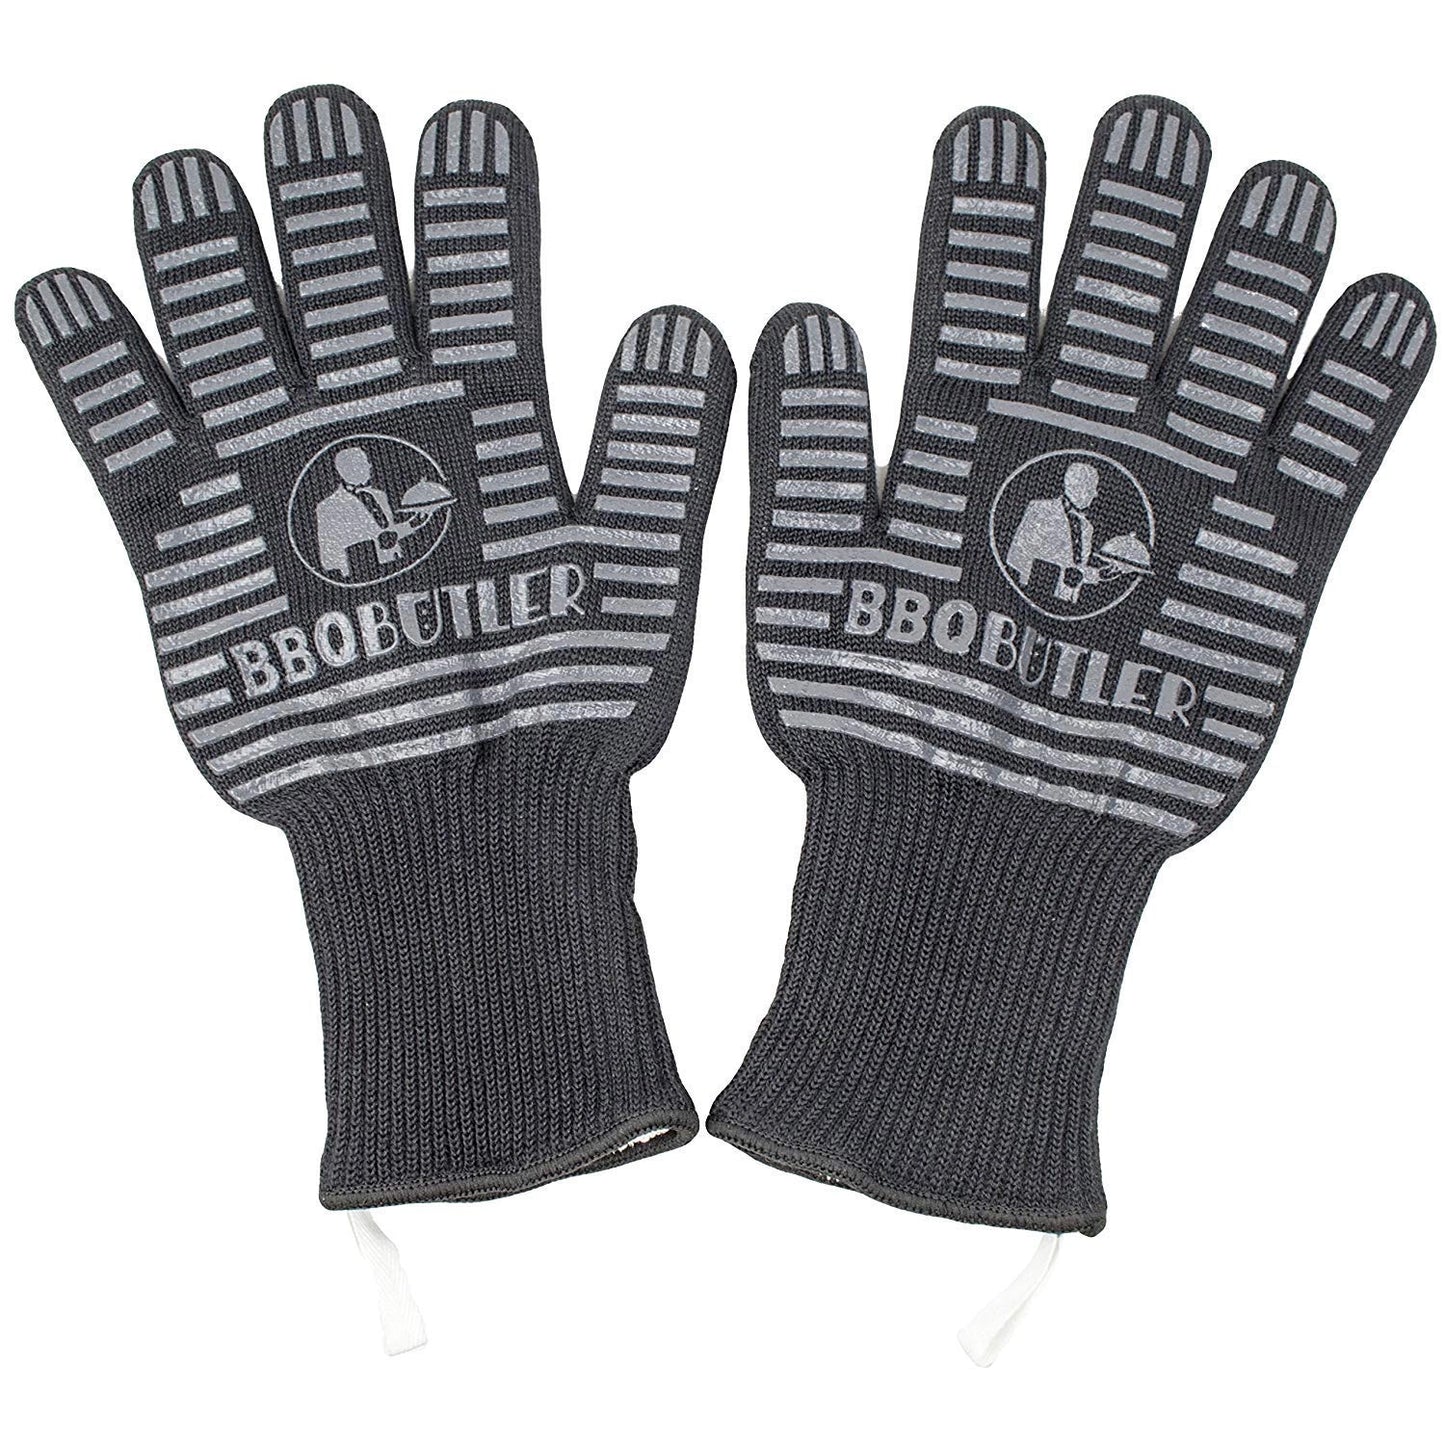 Black Fabric Gloves - Pair